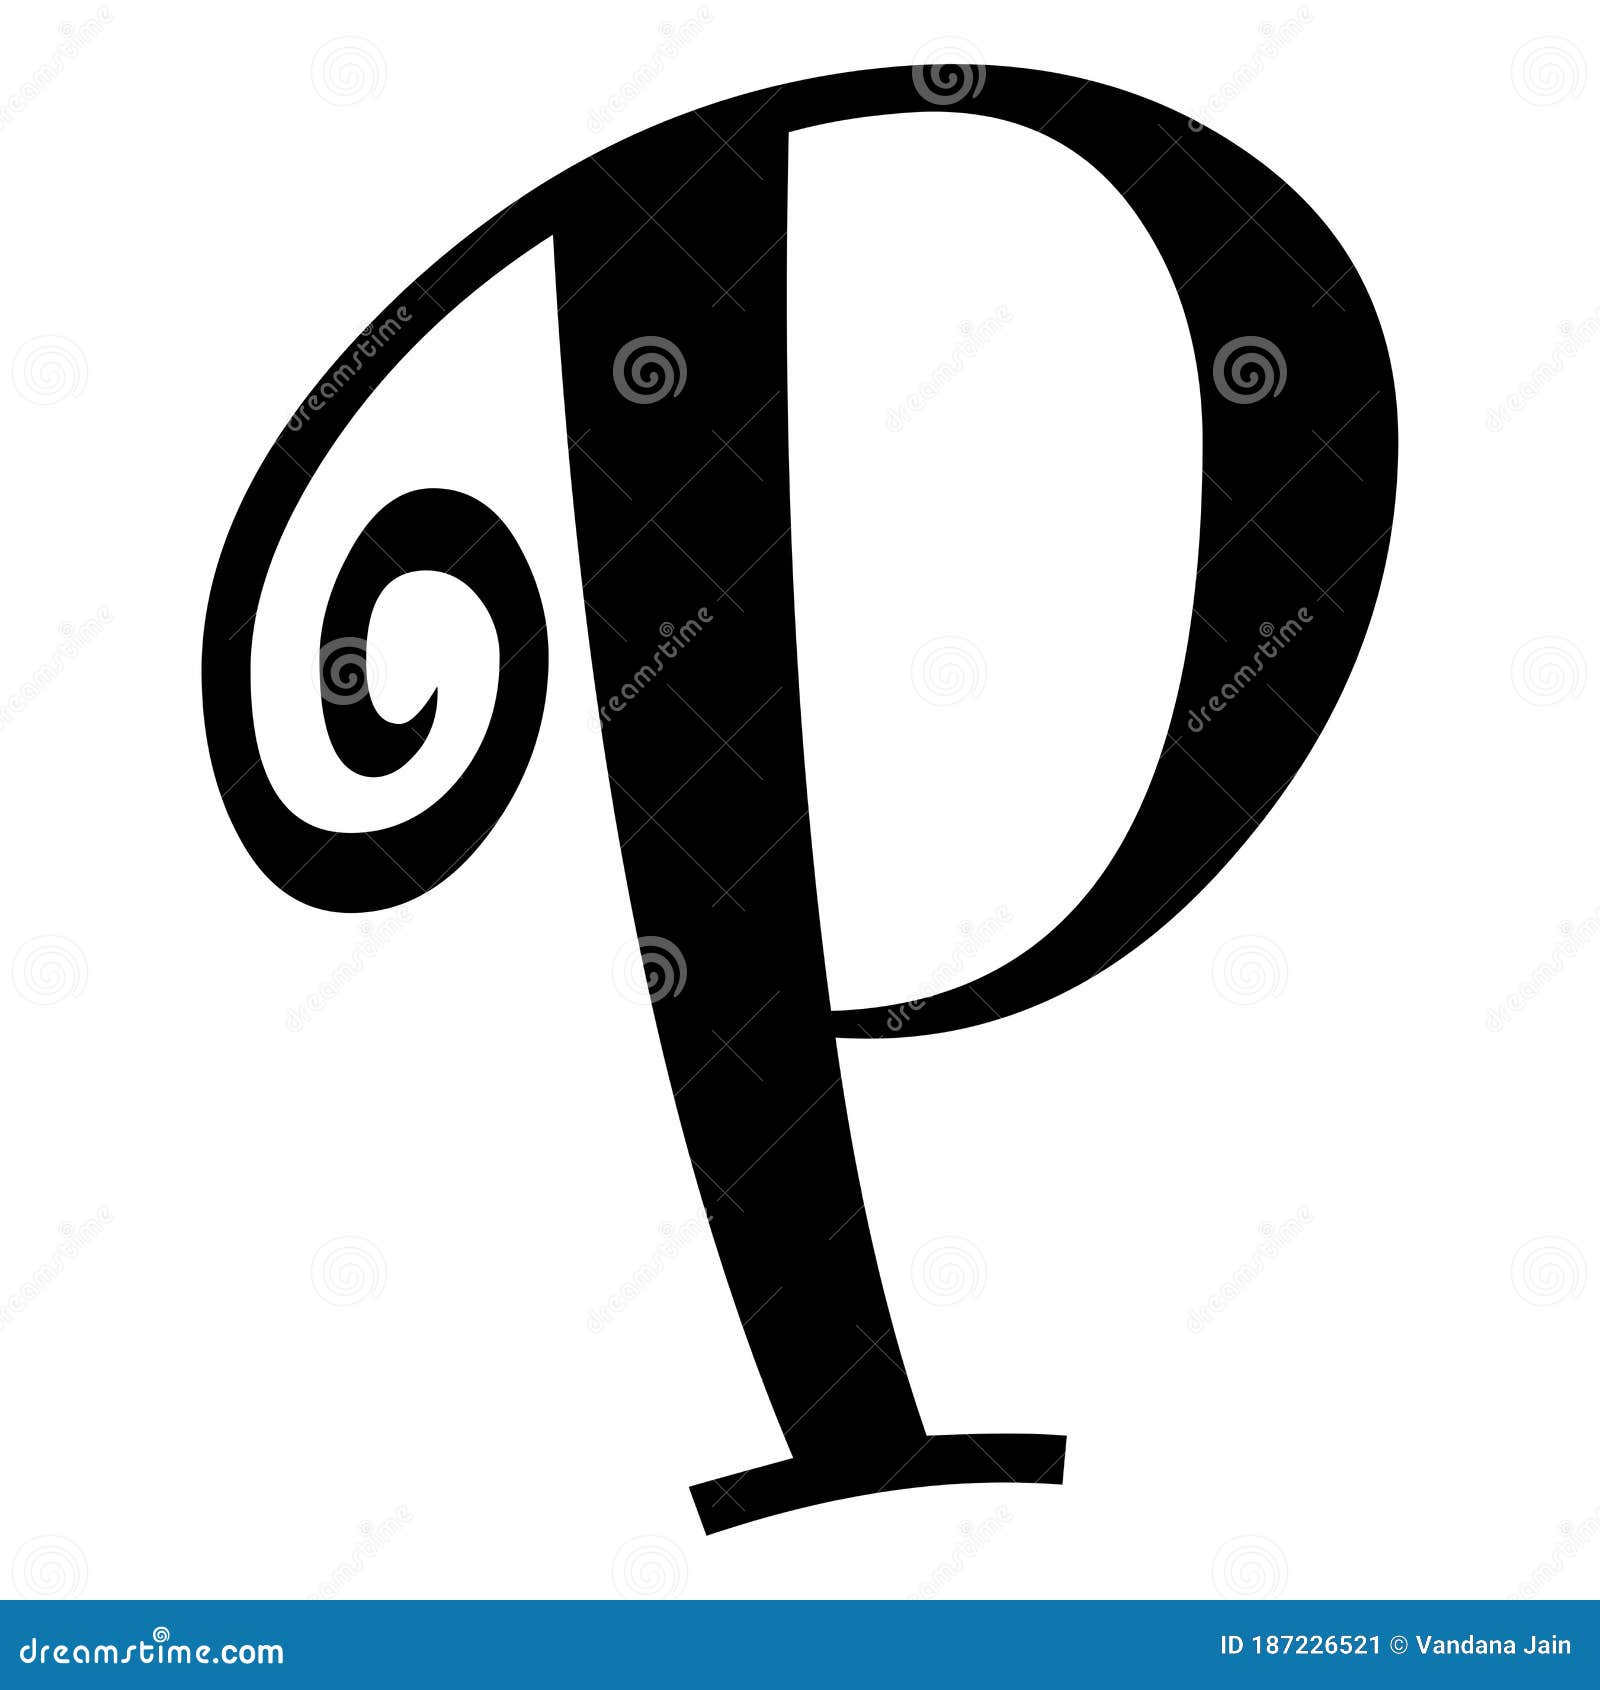 Alphabet Symbol - Stylish Letter  Font Symbol of   on White Background. Stock Illustration - Illustration of descriptive,  imageletters: 187226521